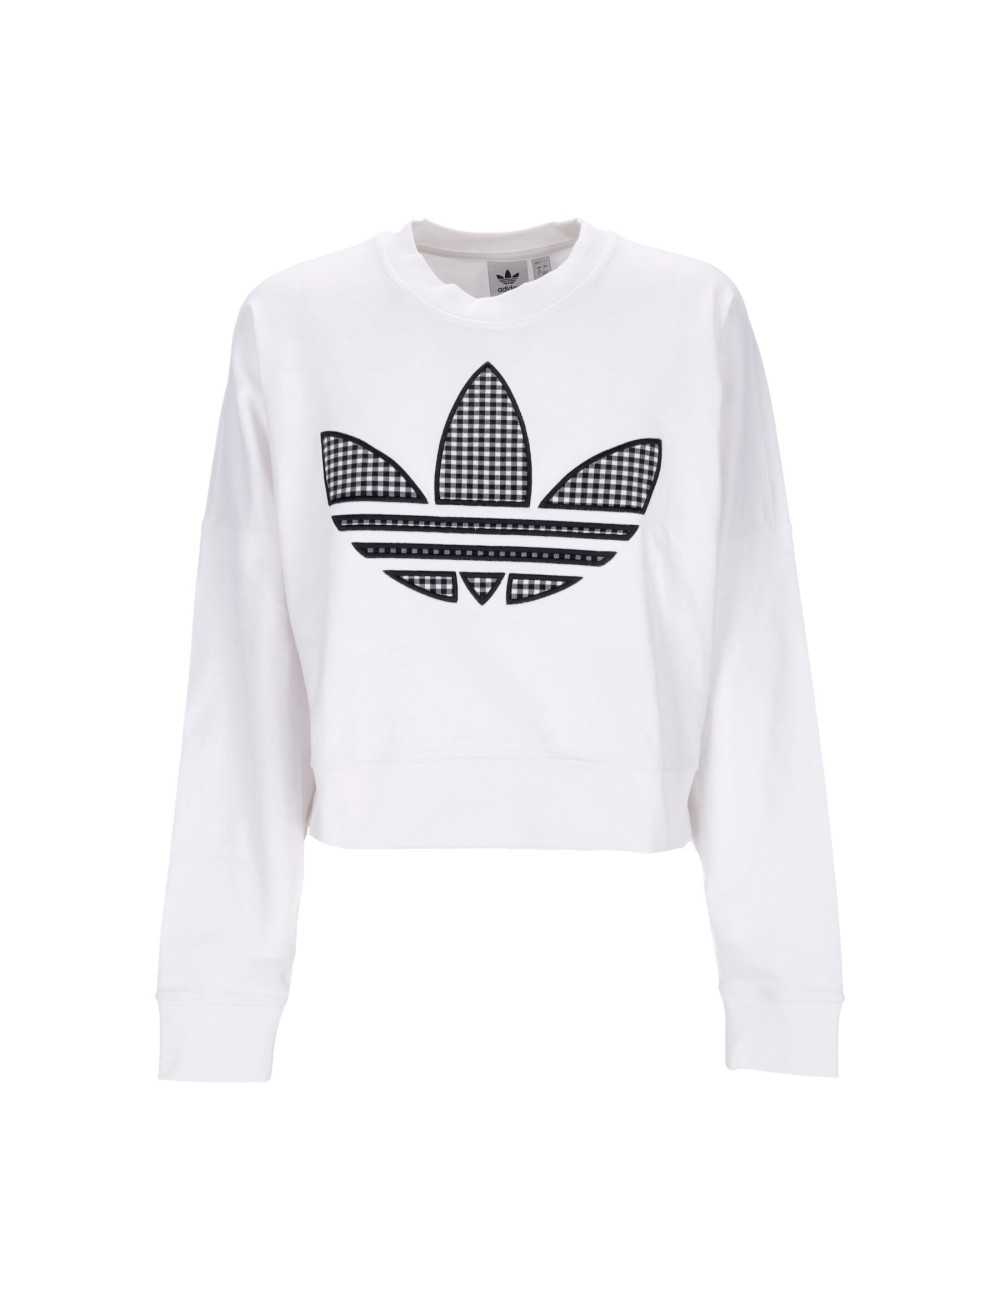 Adidas Originals donna trifoglio bianca logo